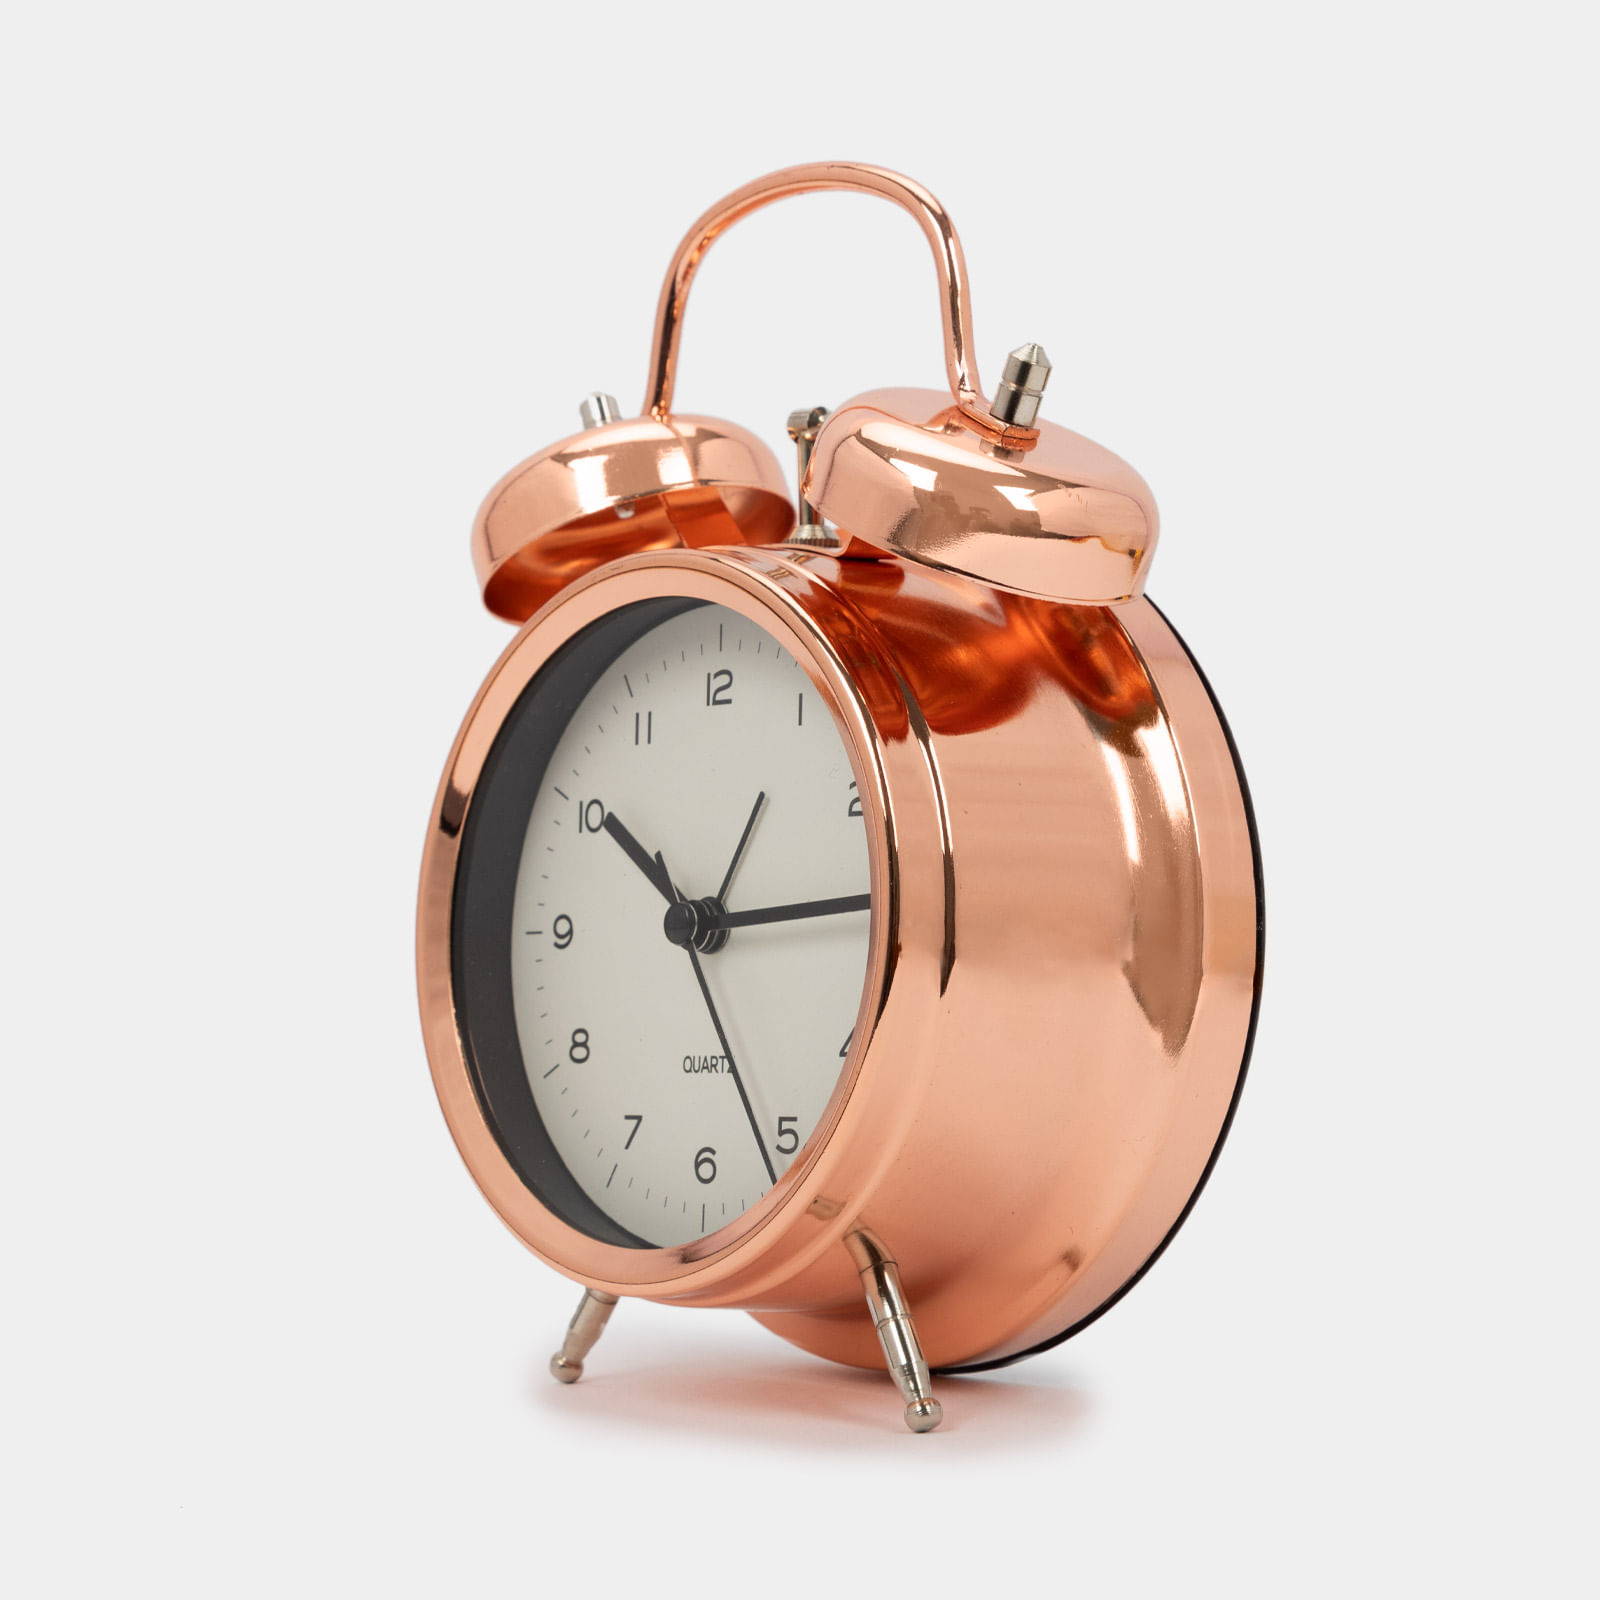 Reloj de mesa dorado rosa con alarma